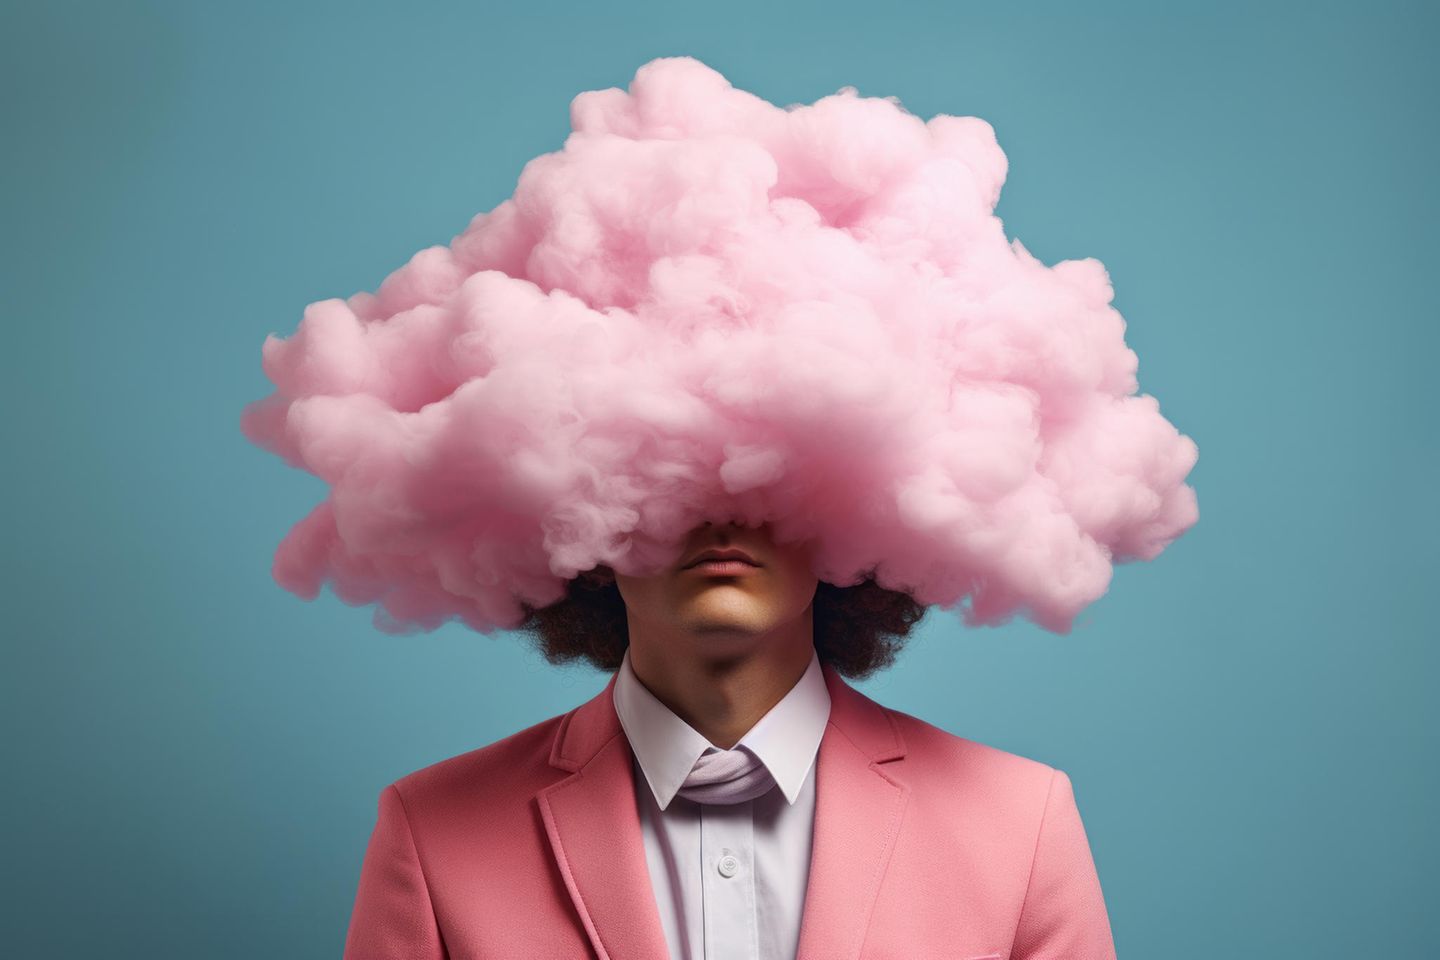 Mensch mit rosa Wolke als Kopf (abstrakte Illustration)